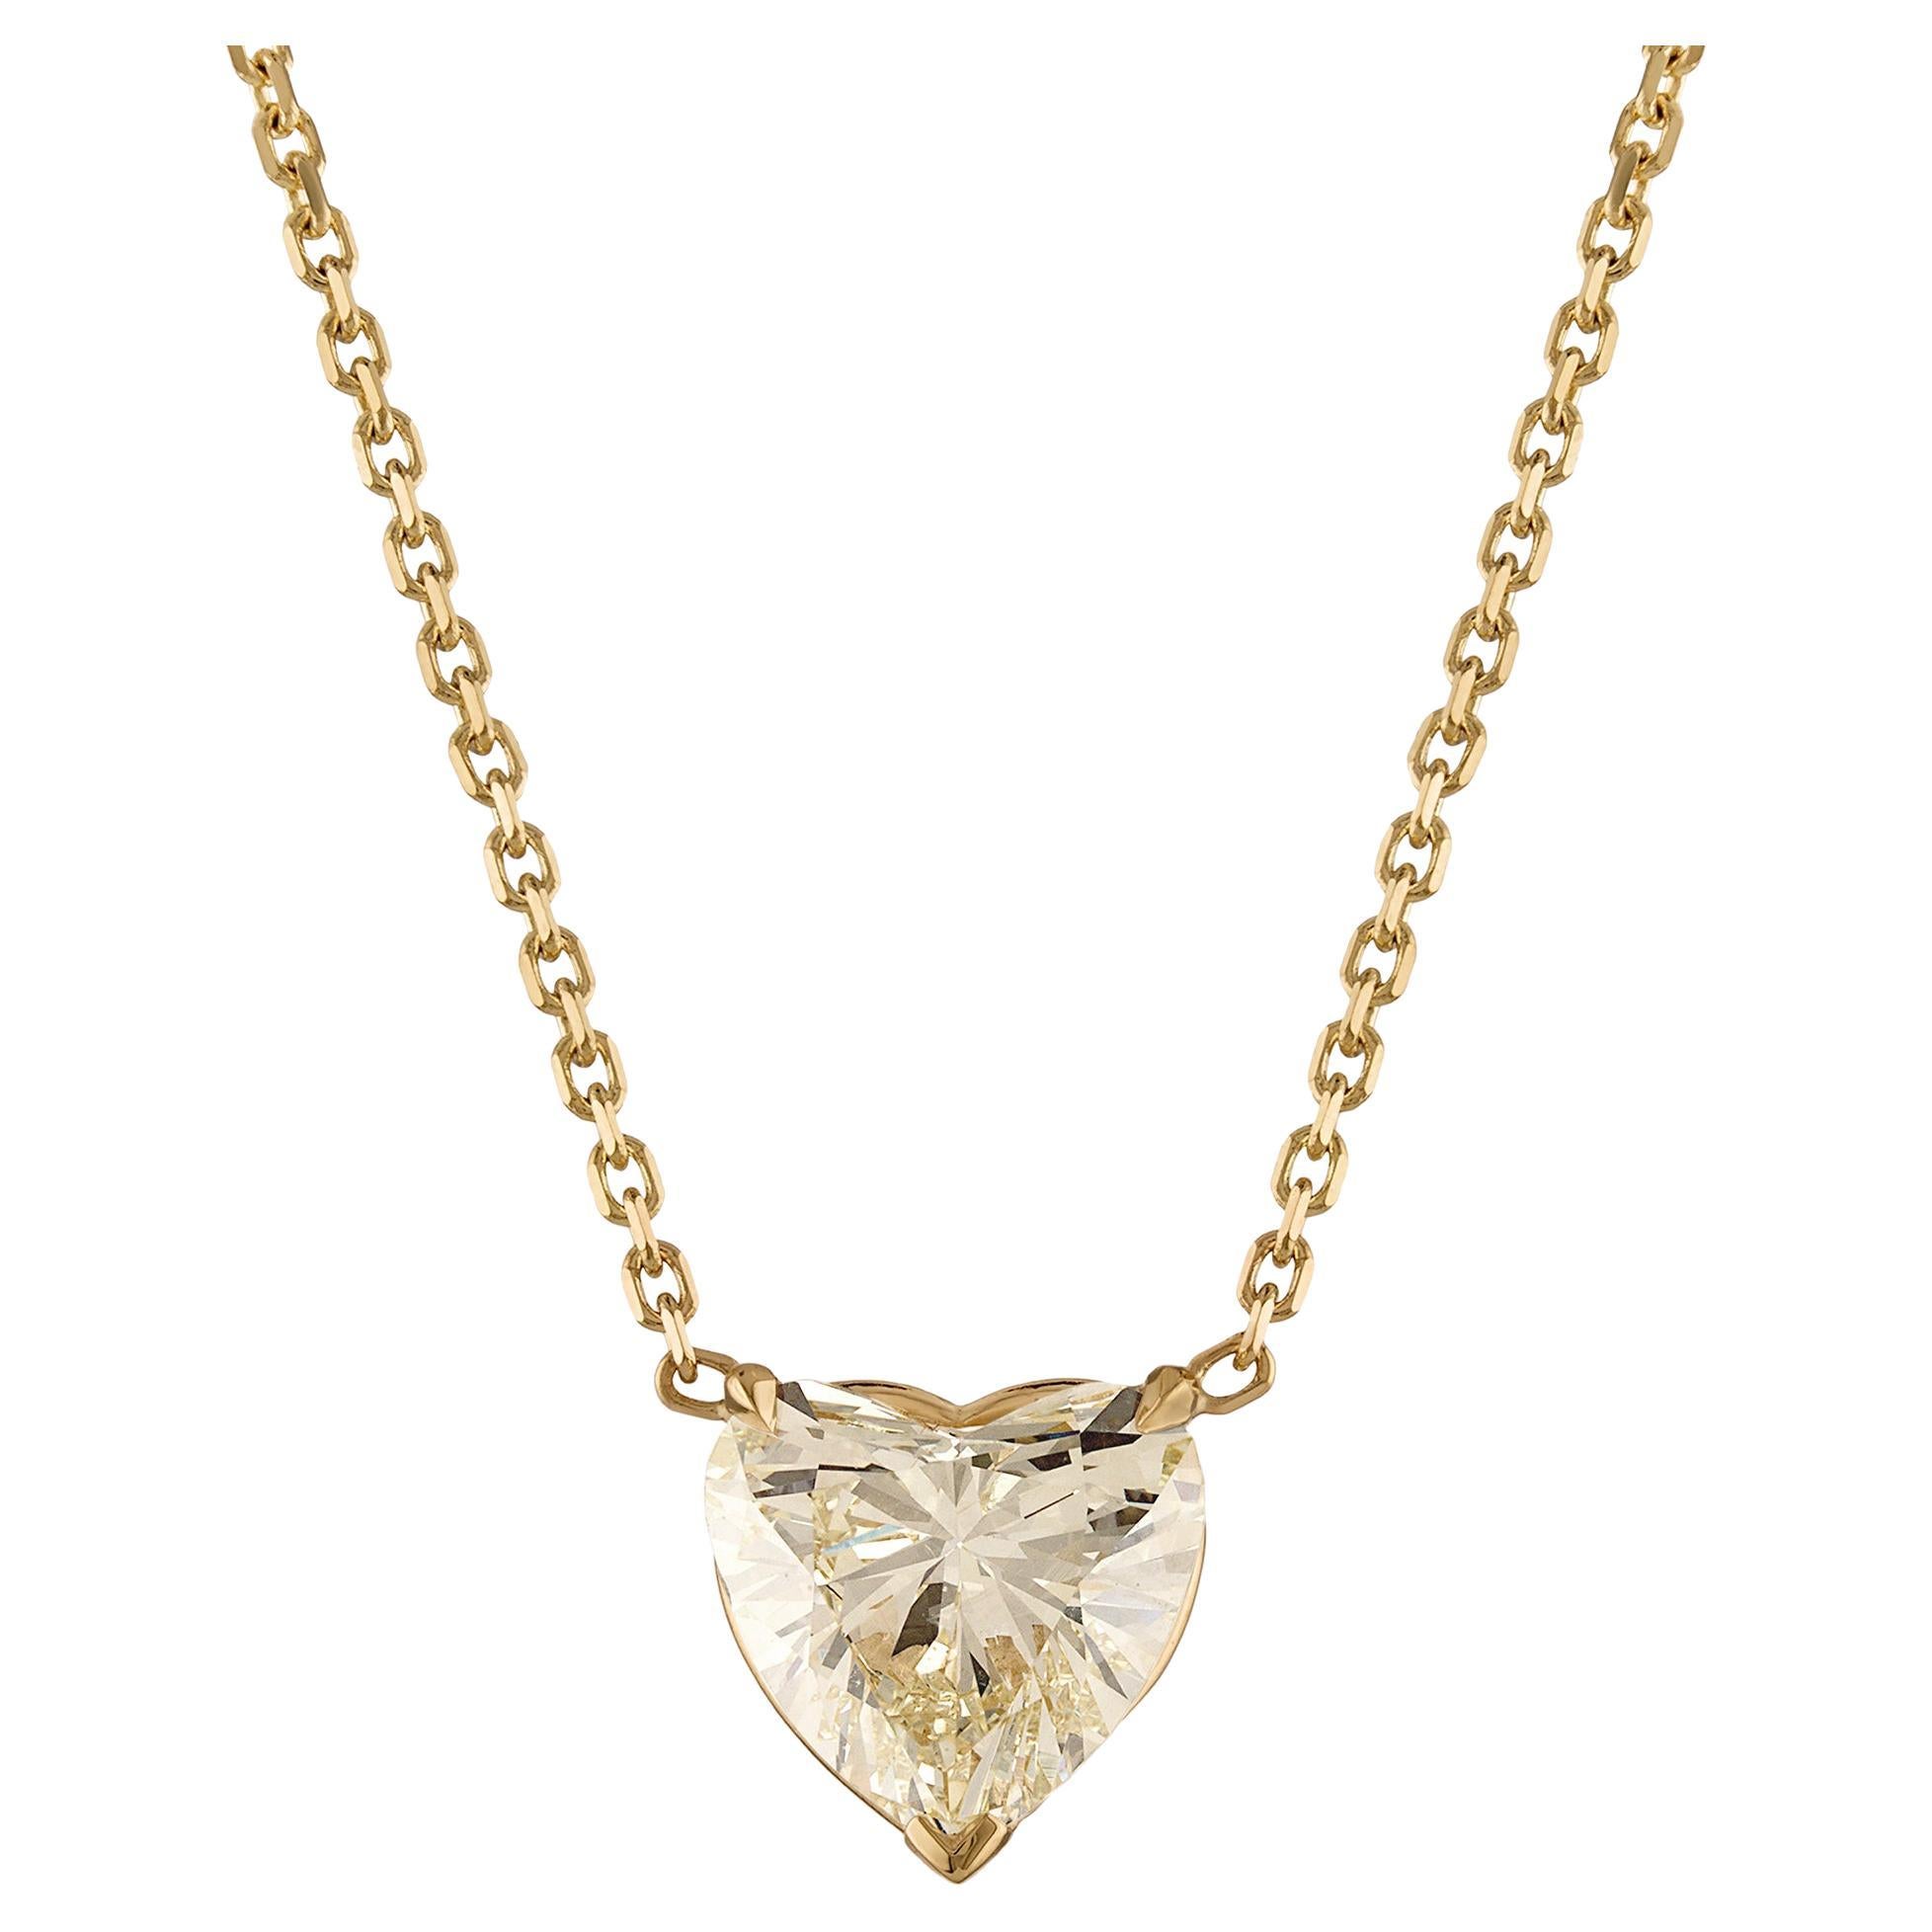 GIA 2.07ct Estate Vintage Heart Diamond Pendant Necklace in 18K Yellow Gold 